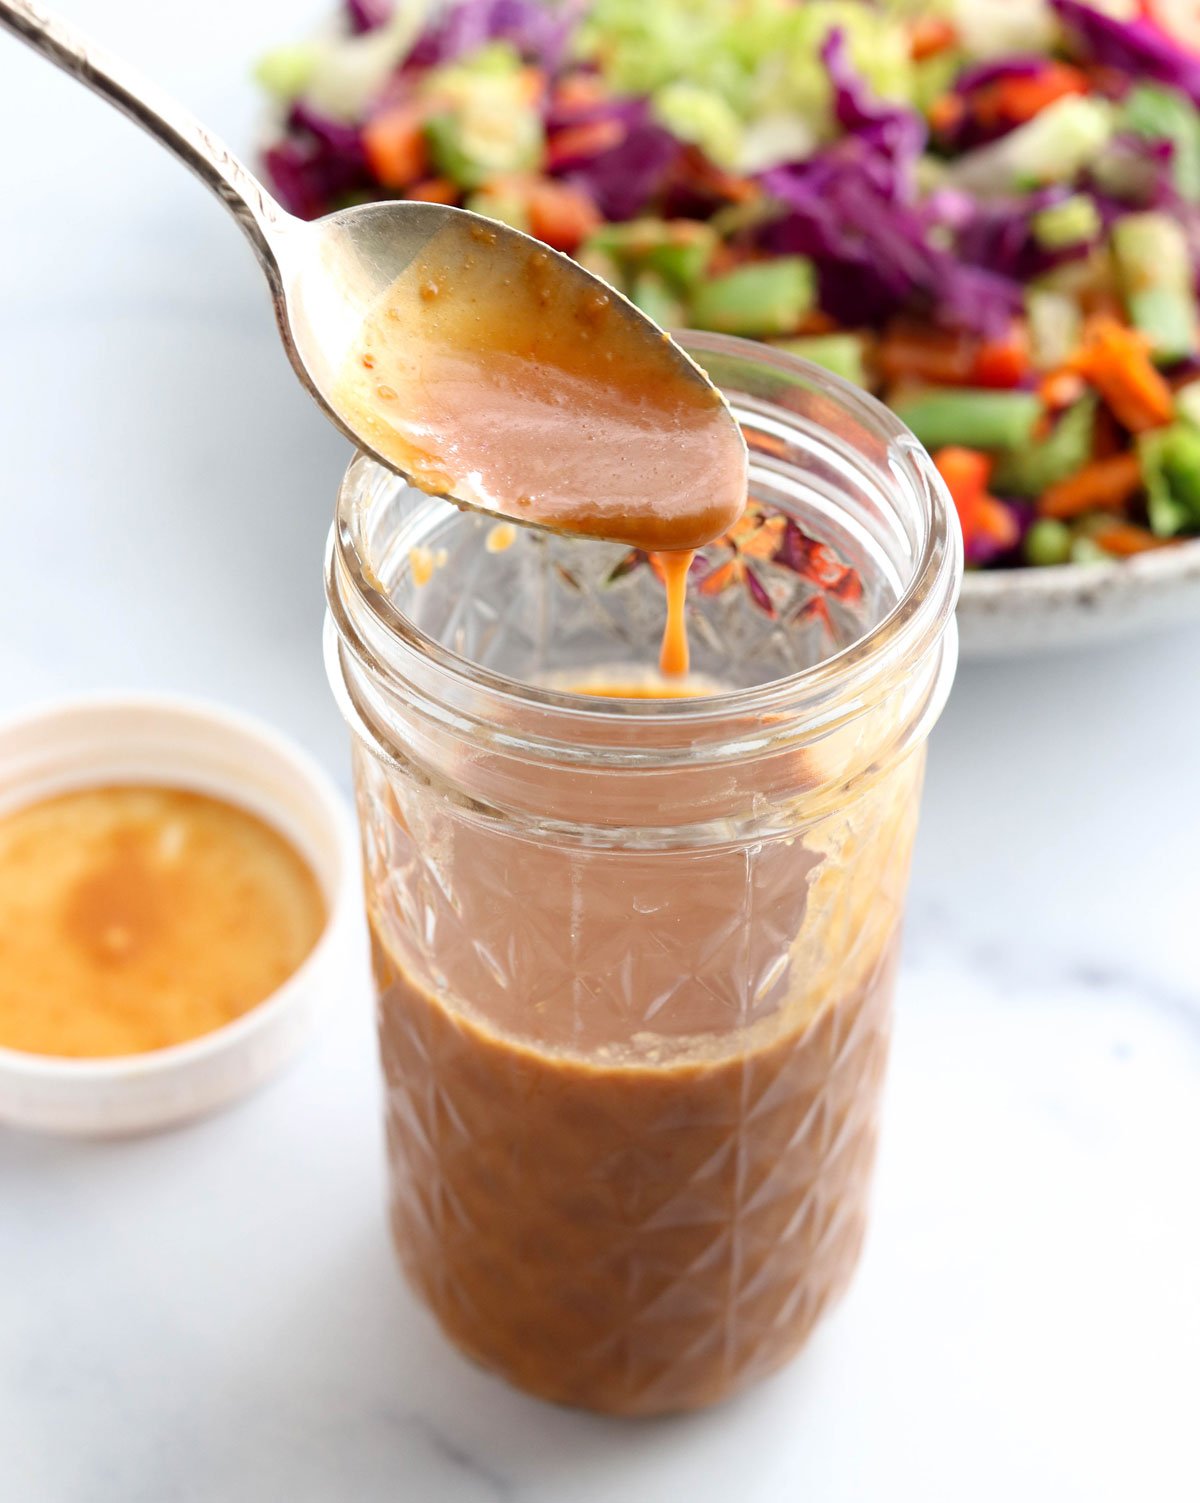 peanut salad dressing in jar on spoon